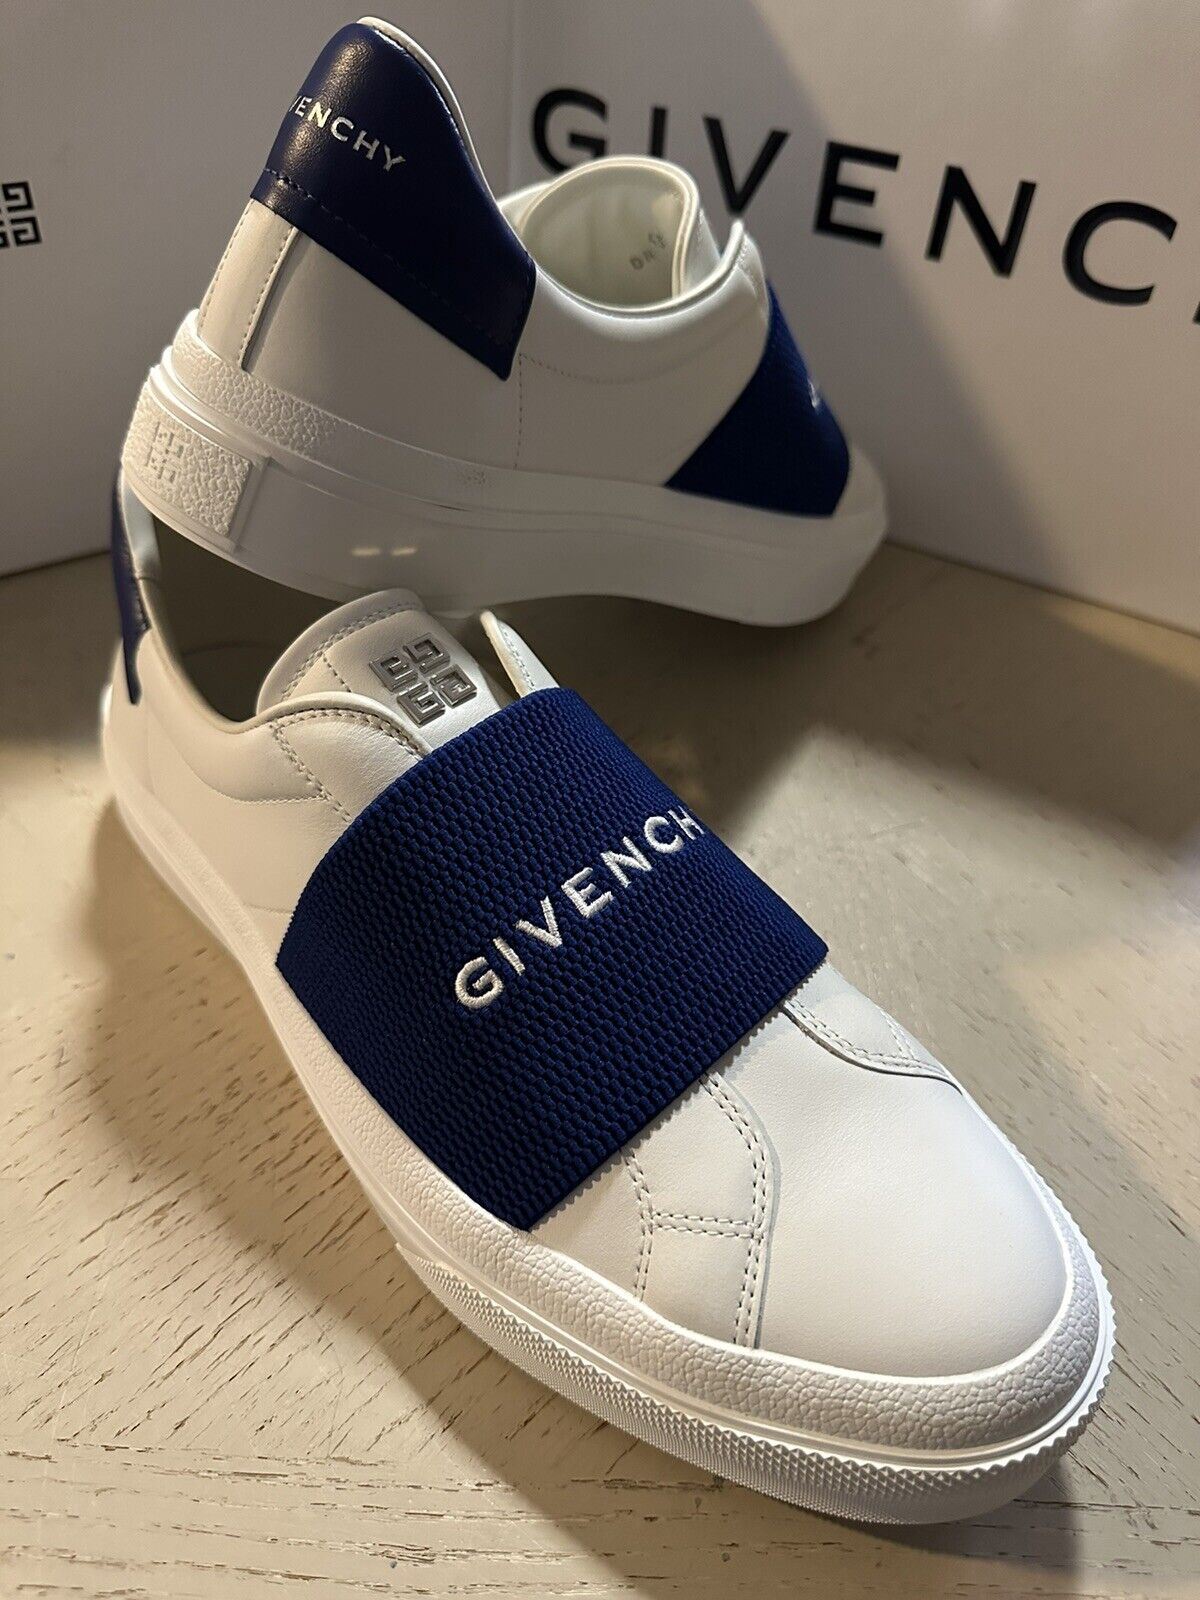 NIB Givenchy Men City Sport Elastic Vamp Leather Sneakers White/Blue 9 US/42 Eu